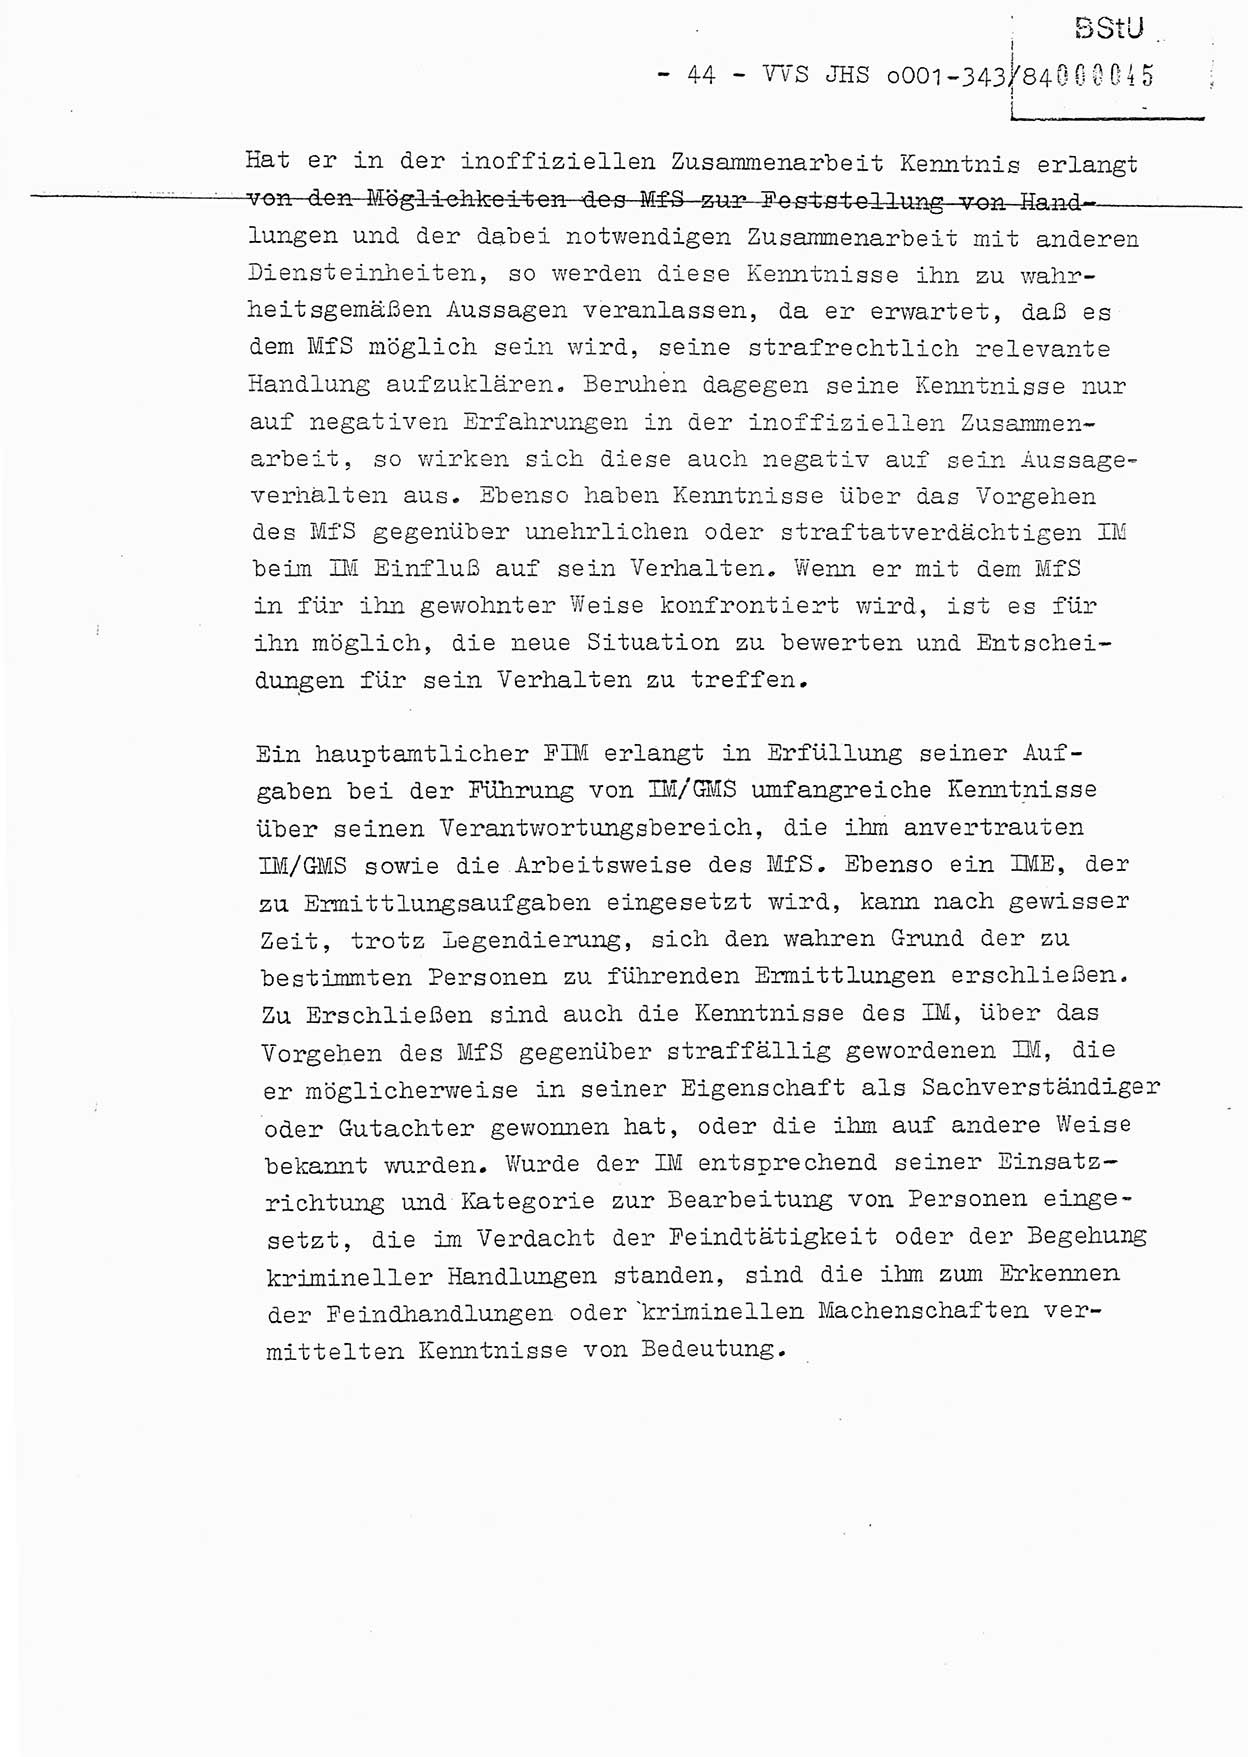 Diplomarbeit, Oberleutnant Bernd Michael (HA Ⅸ/5), Oberleutnant Peter Felber (HA IX/5), Ministerium für Staatssicherheit (MfS) [Deutsche Demokratische Republik (DDR)], Juristische Hochschule (JHS), Vertrauliche Verschlußsache (VVS) o001-343/84, Potsdam 1985, Seite 44 (Dipl.-Arb. MfS DDR JHS VVS o001-343/84 1985, S. 44)